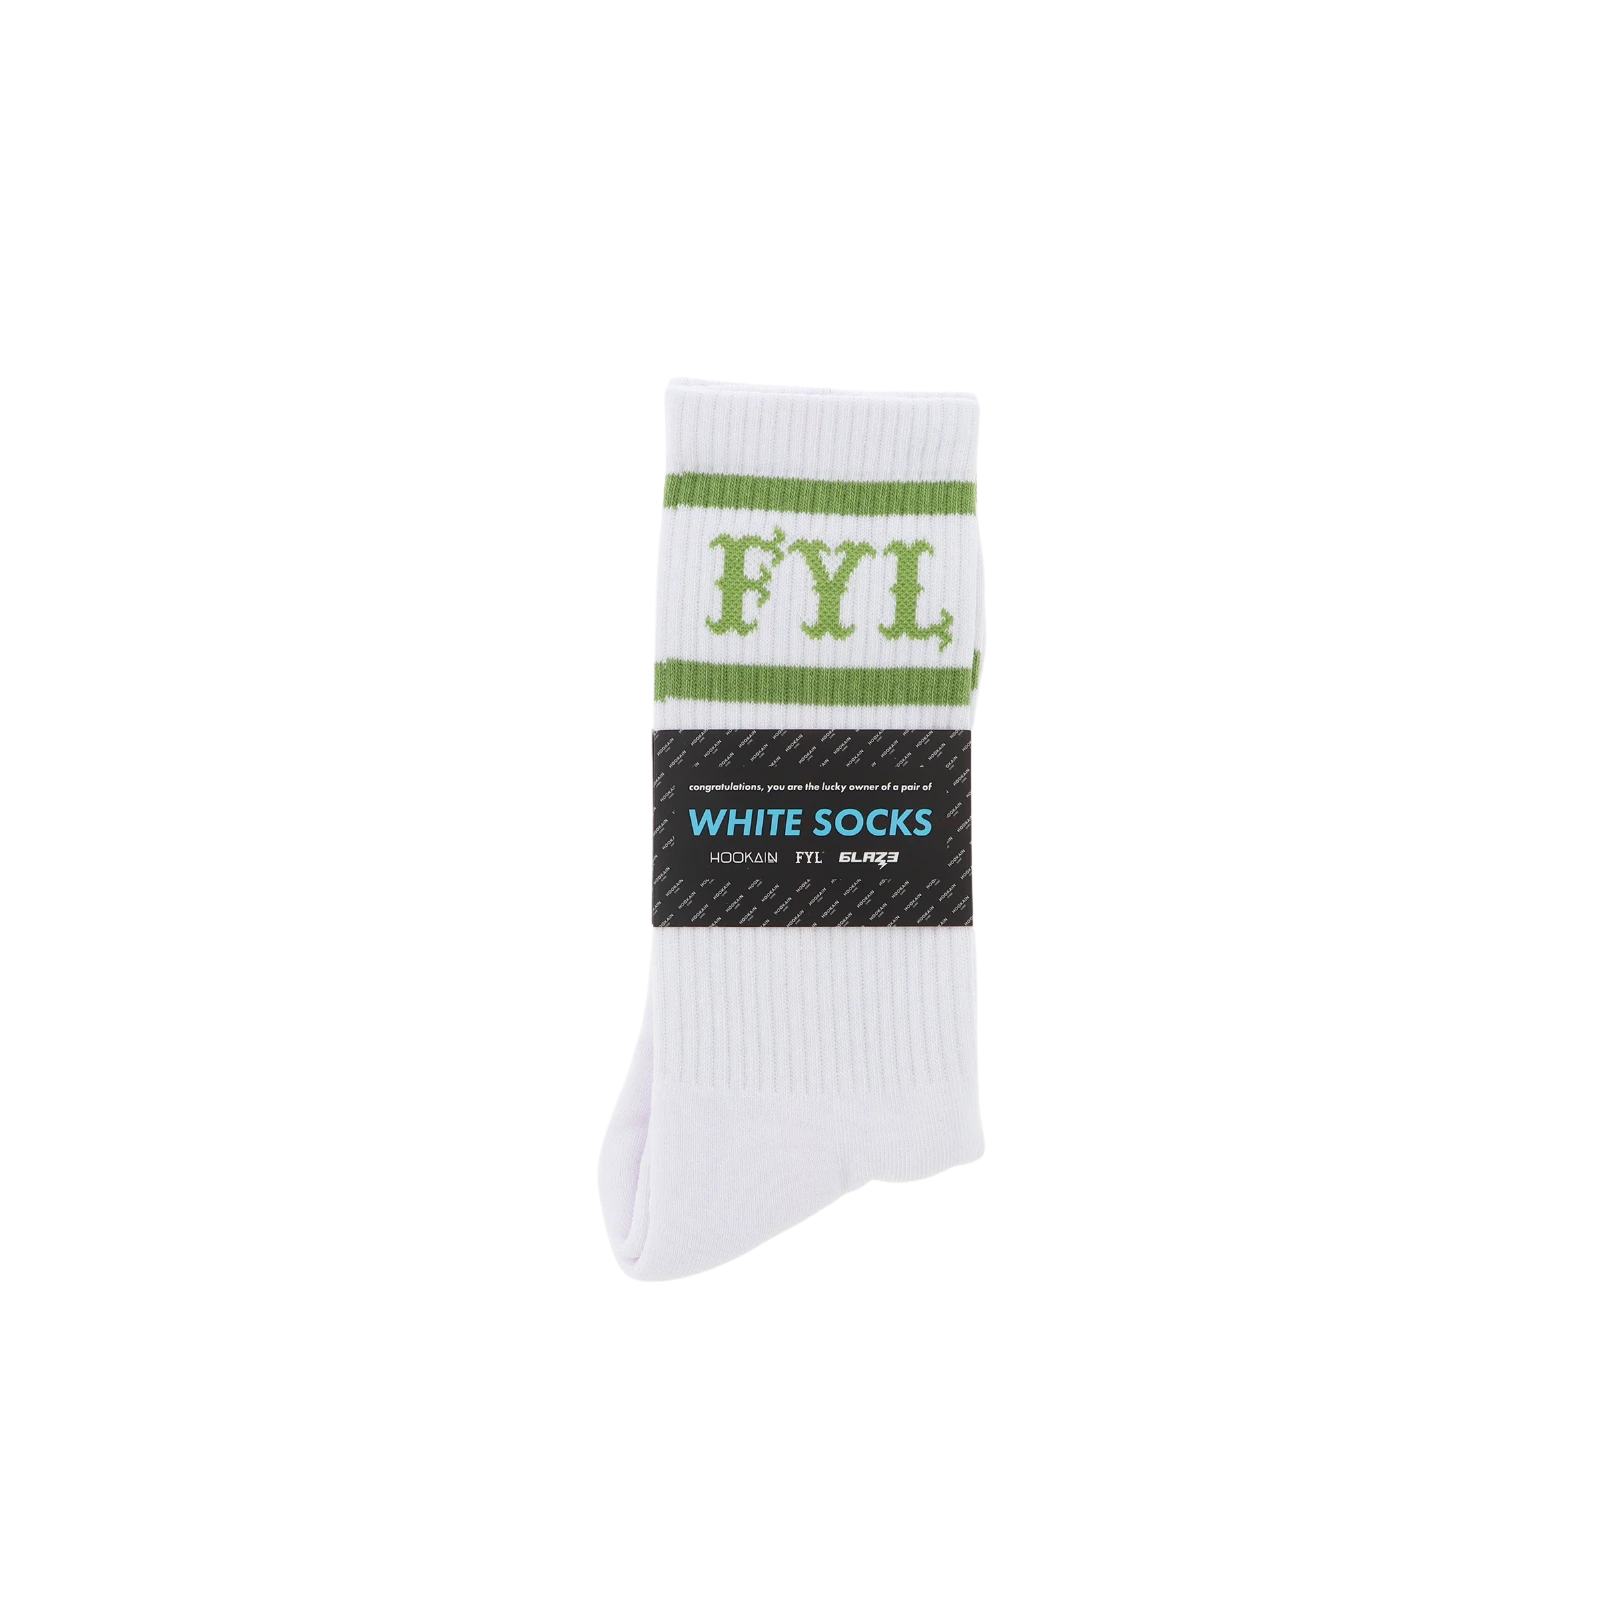 White Socks - FYL - Sage Green - L